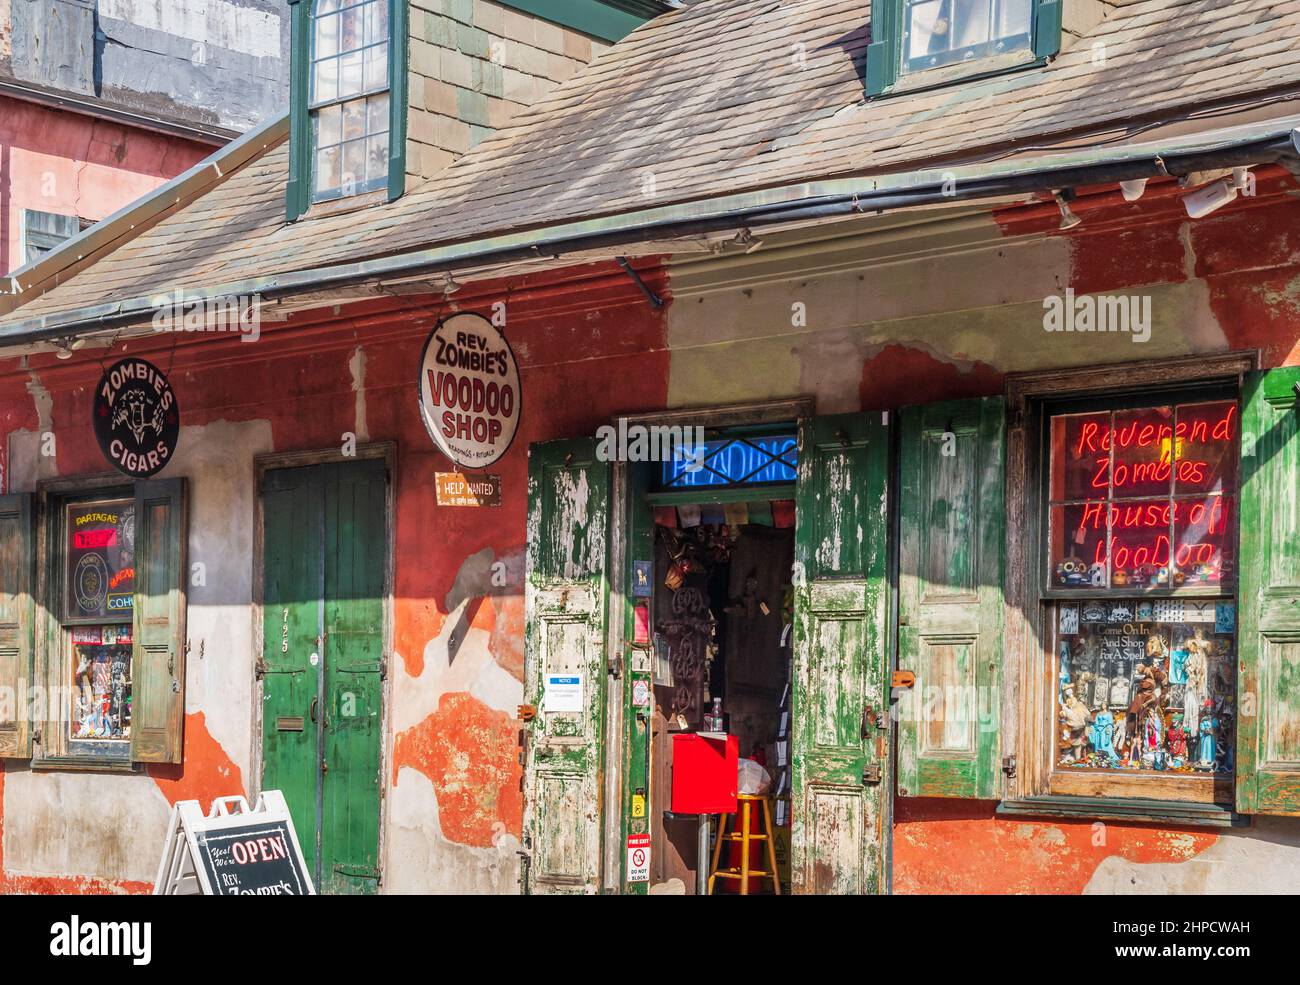 Reverend Zombie's Voodoo Shop, New Orleans, Louisiana, USA. Stockfoto